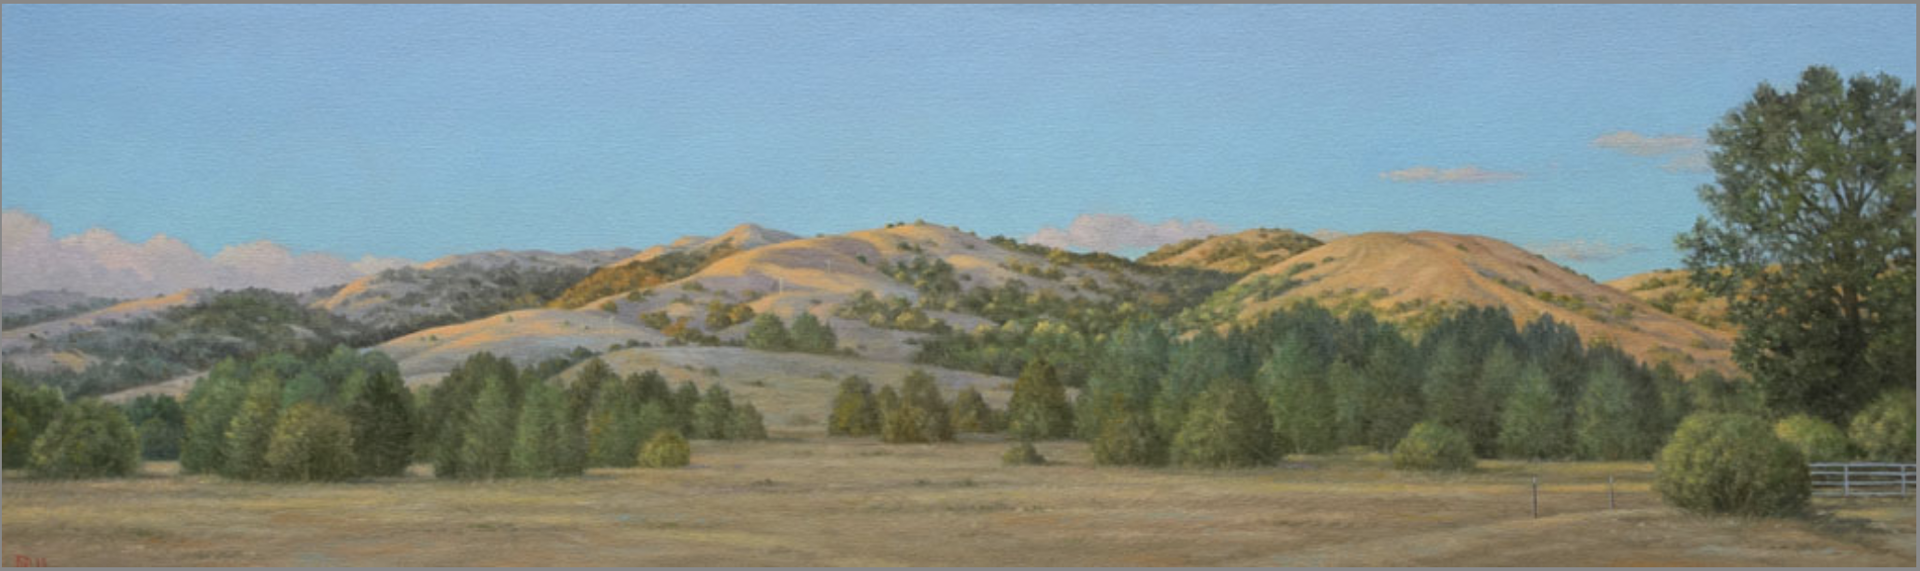 Grady Ranch II by Willard Dixon